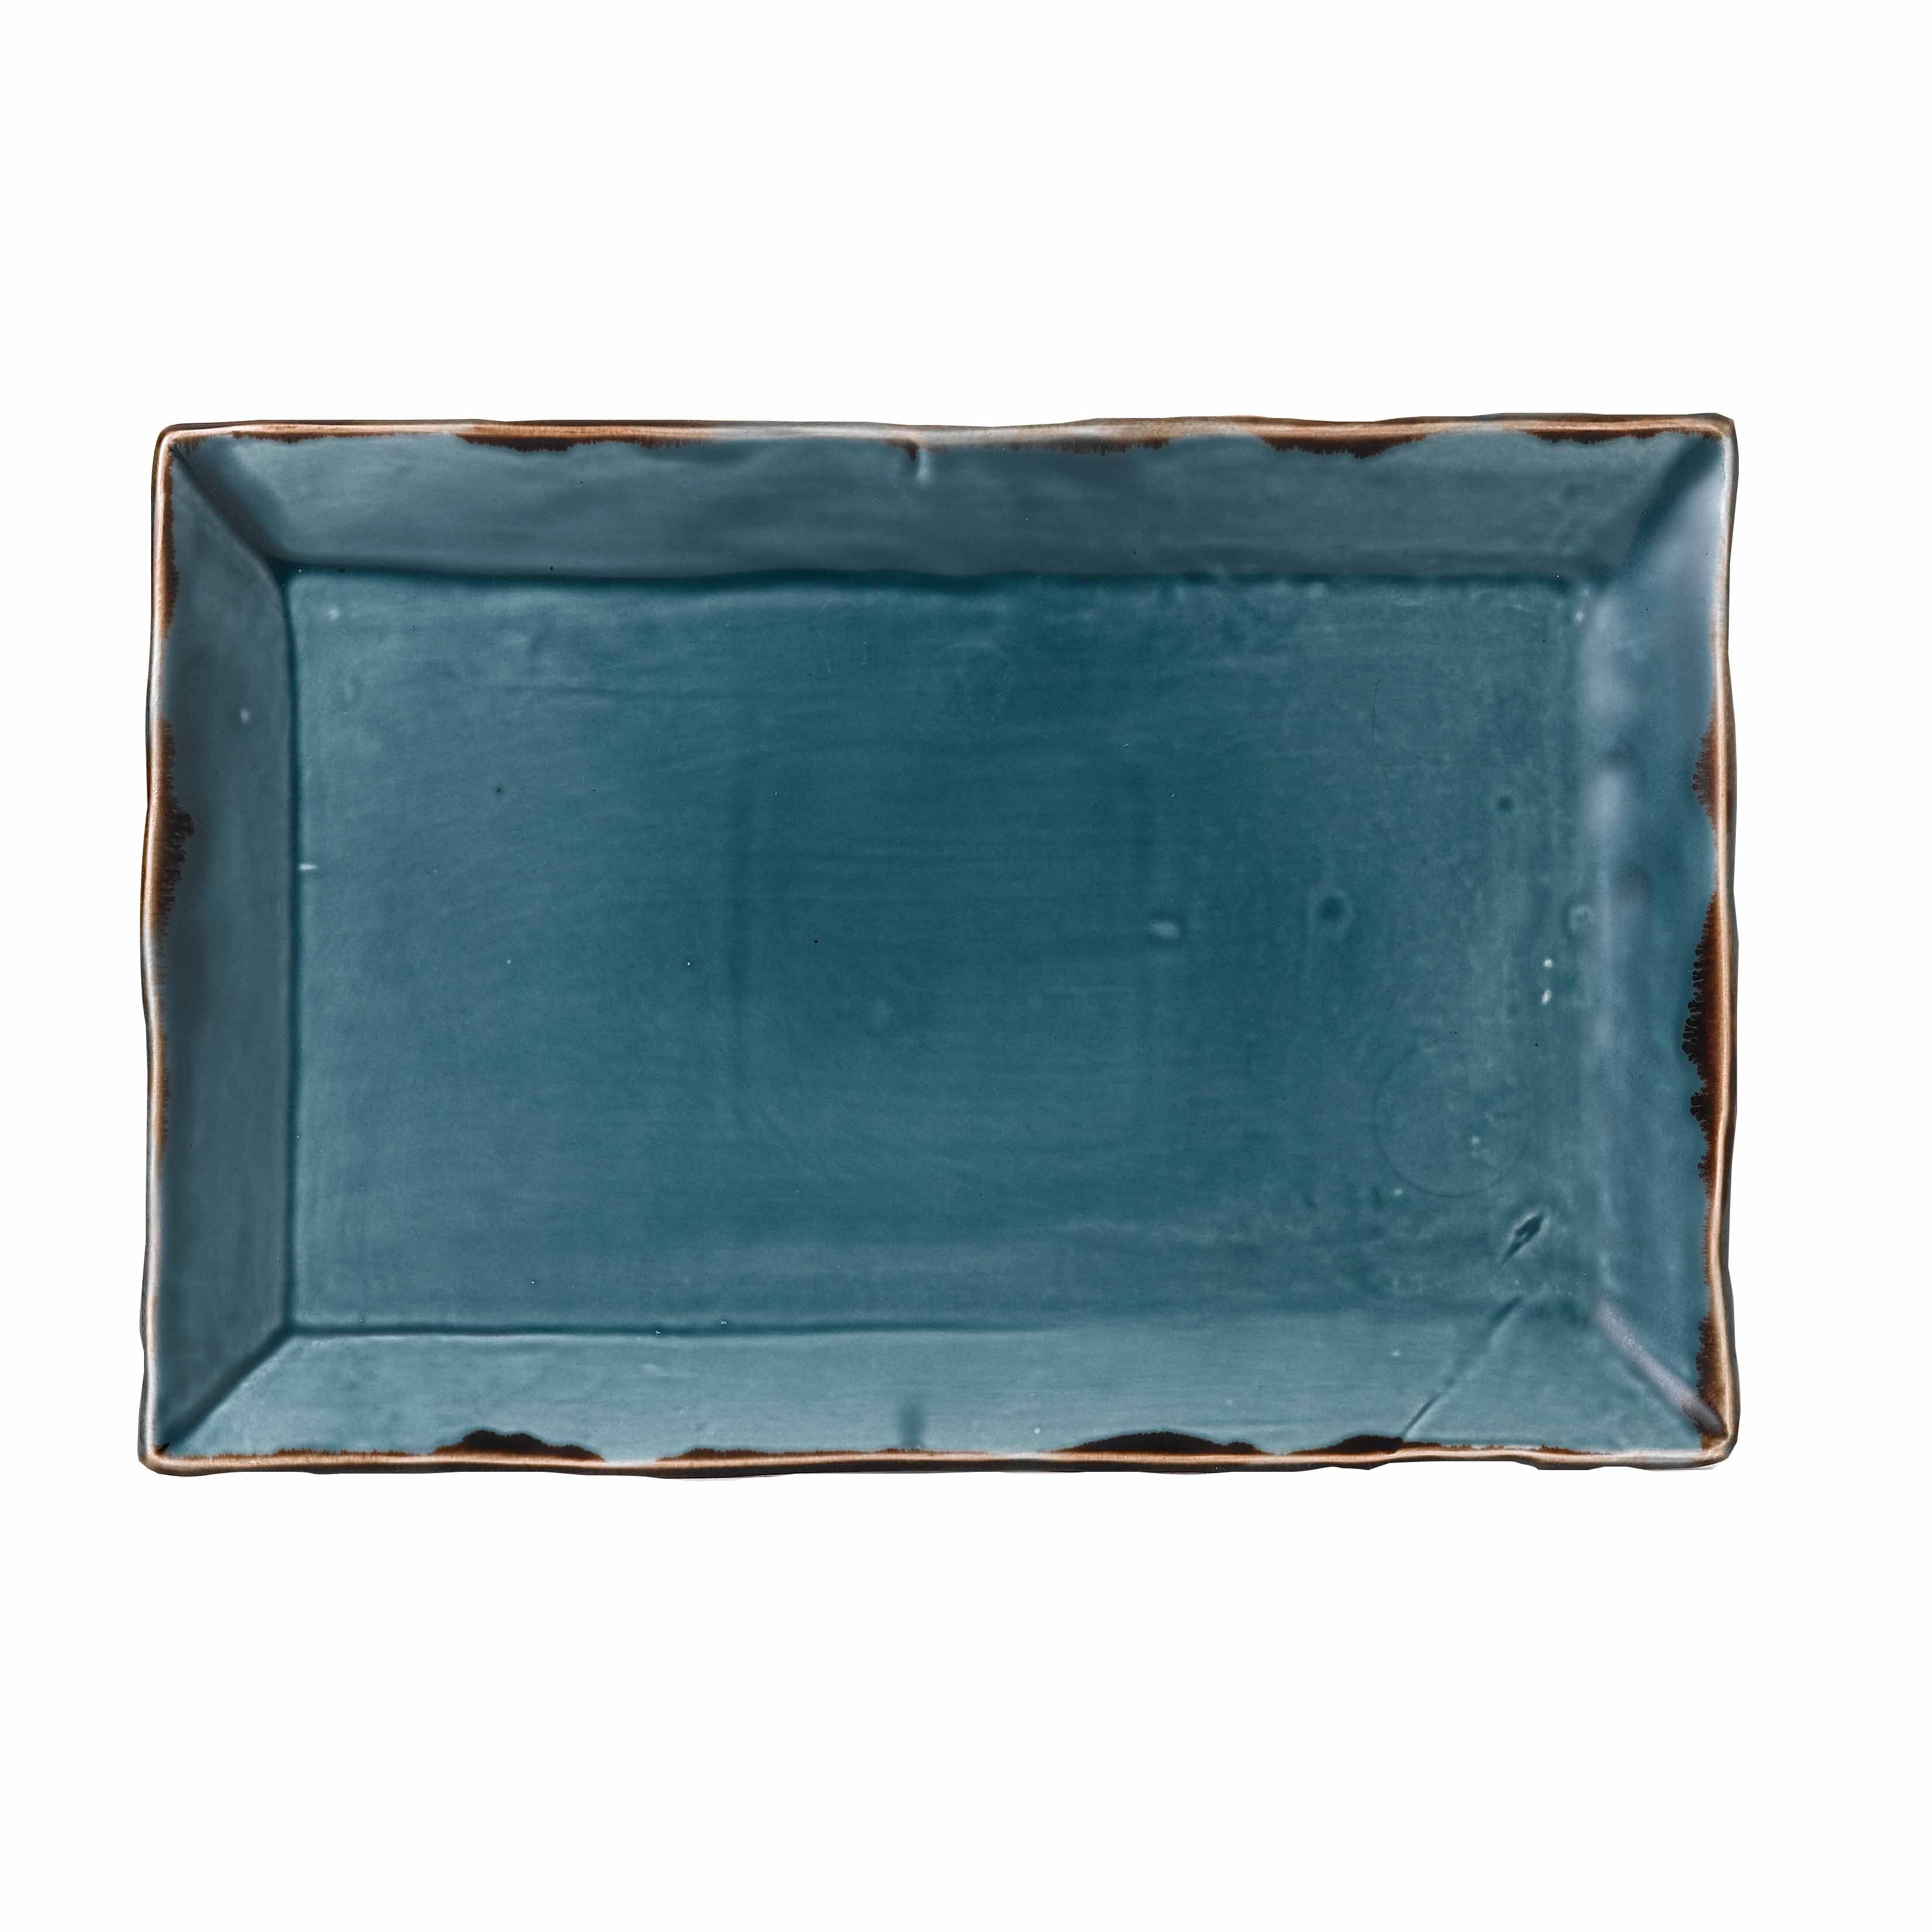 Dudson Servierbrett Dudson Harvest Porzellan Rechteckig Tablett Stück, 6 34.5x23.3cm Blau Feinstes